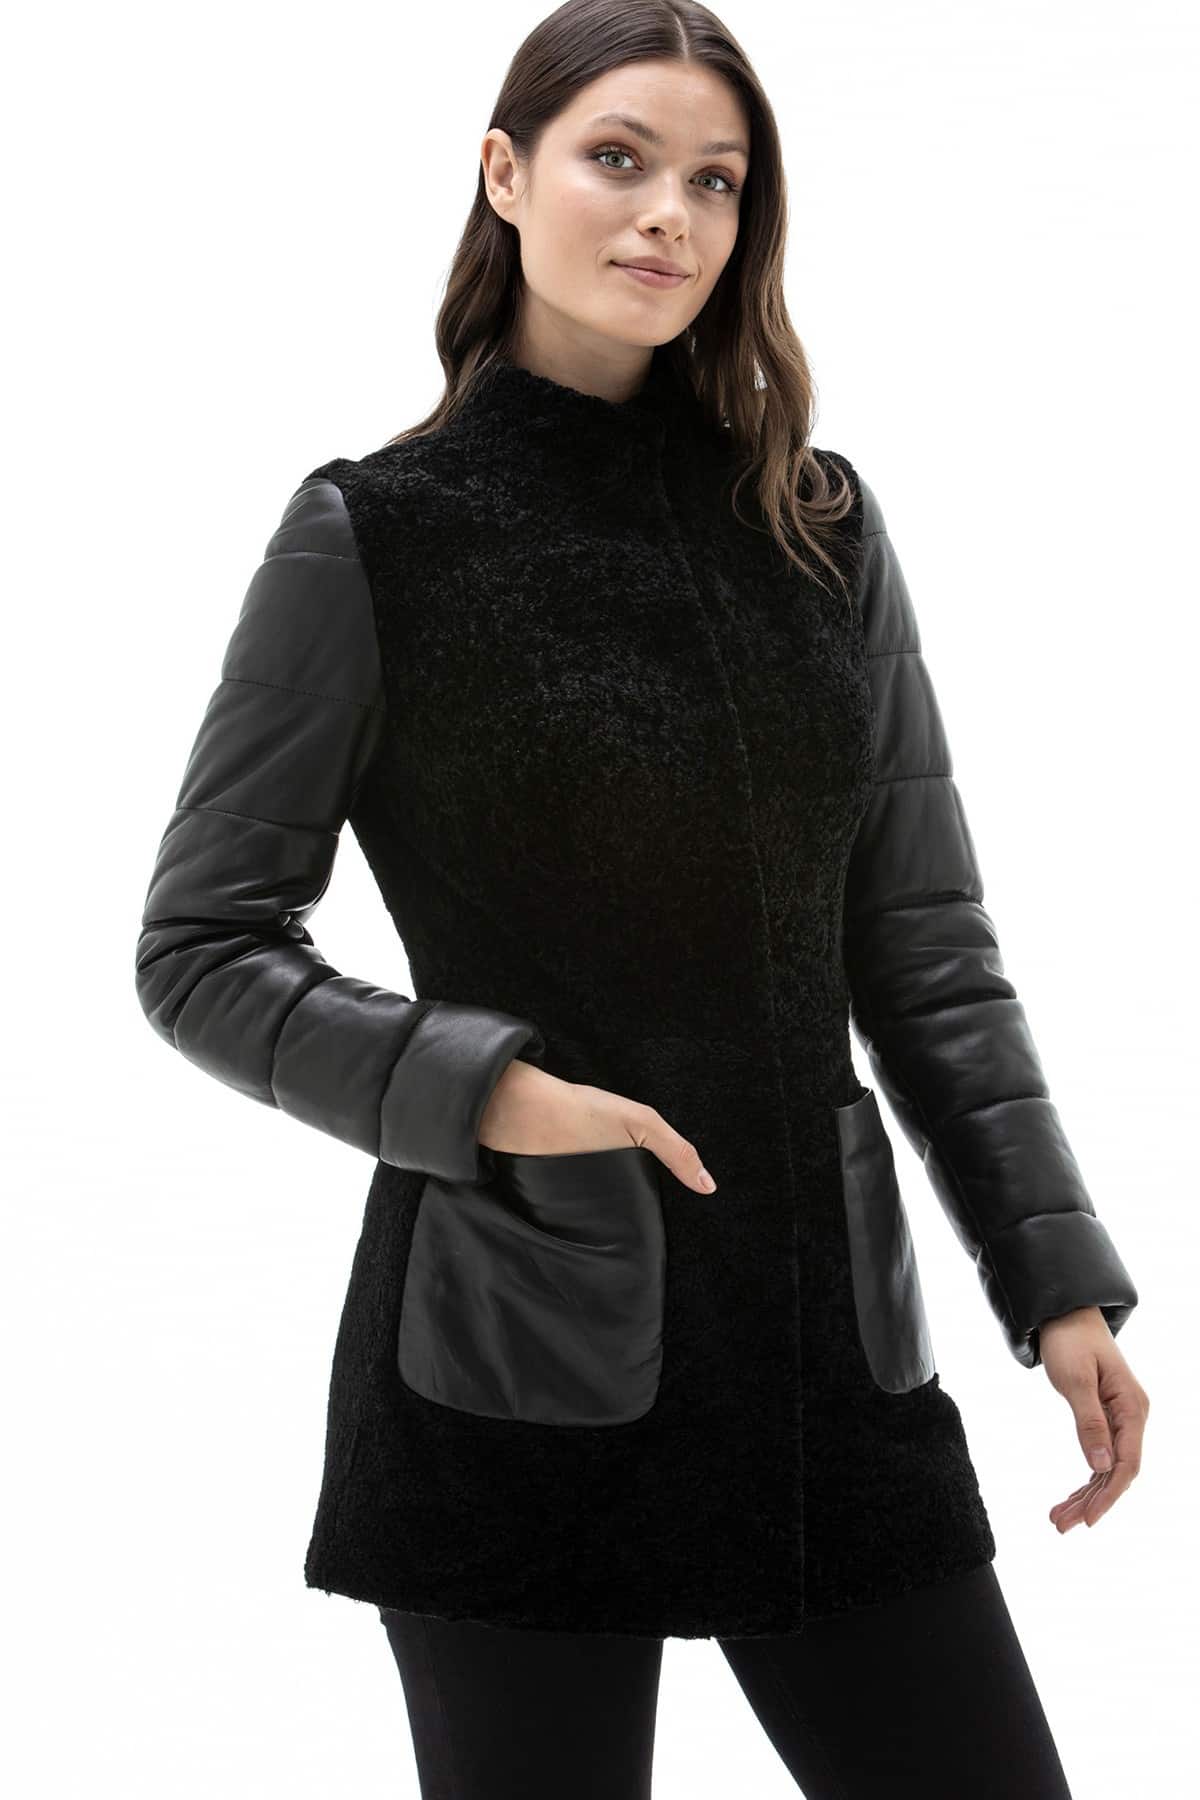 Fashionable Womens Jacket - Ladies Black Real Leather Jacket